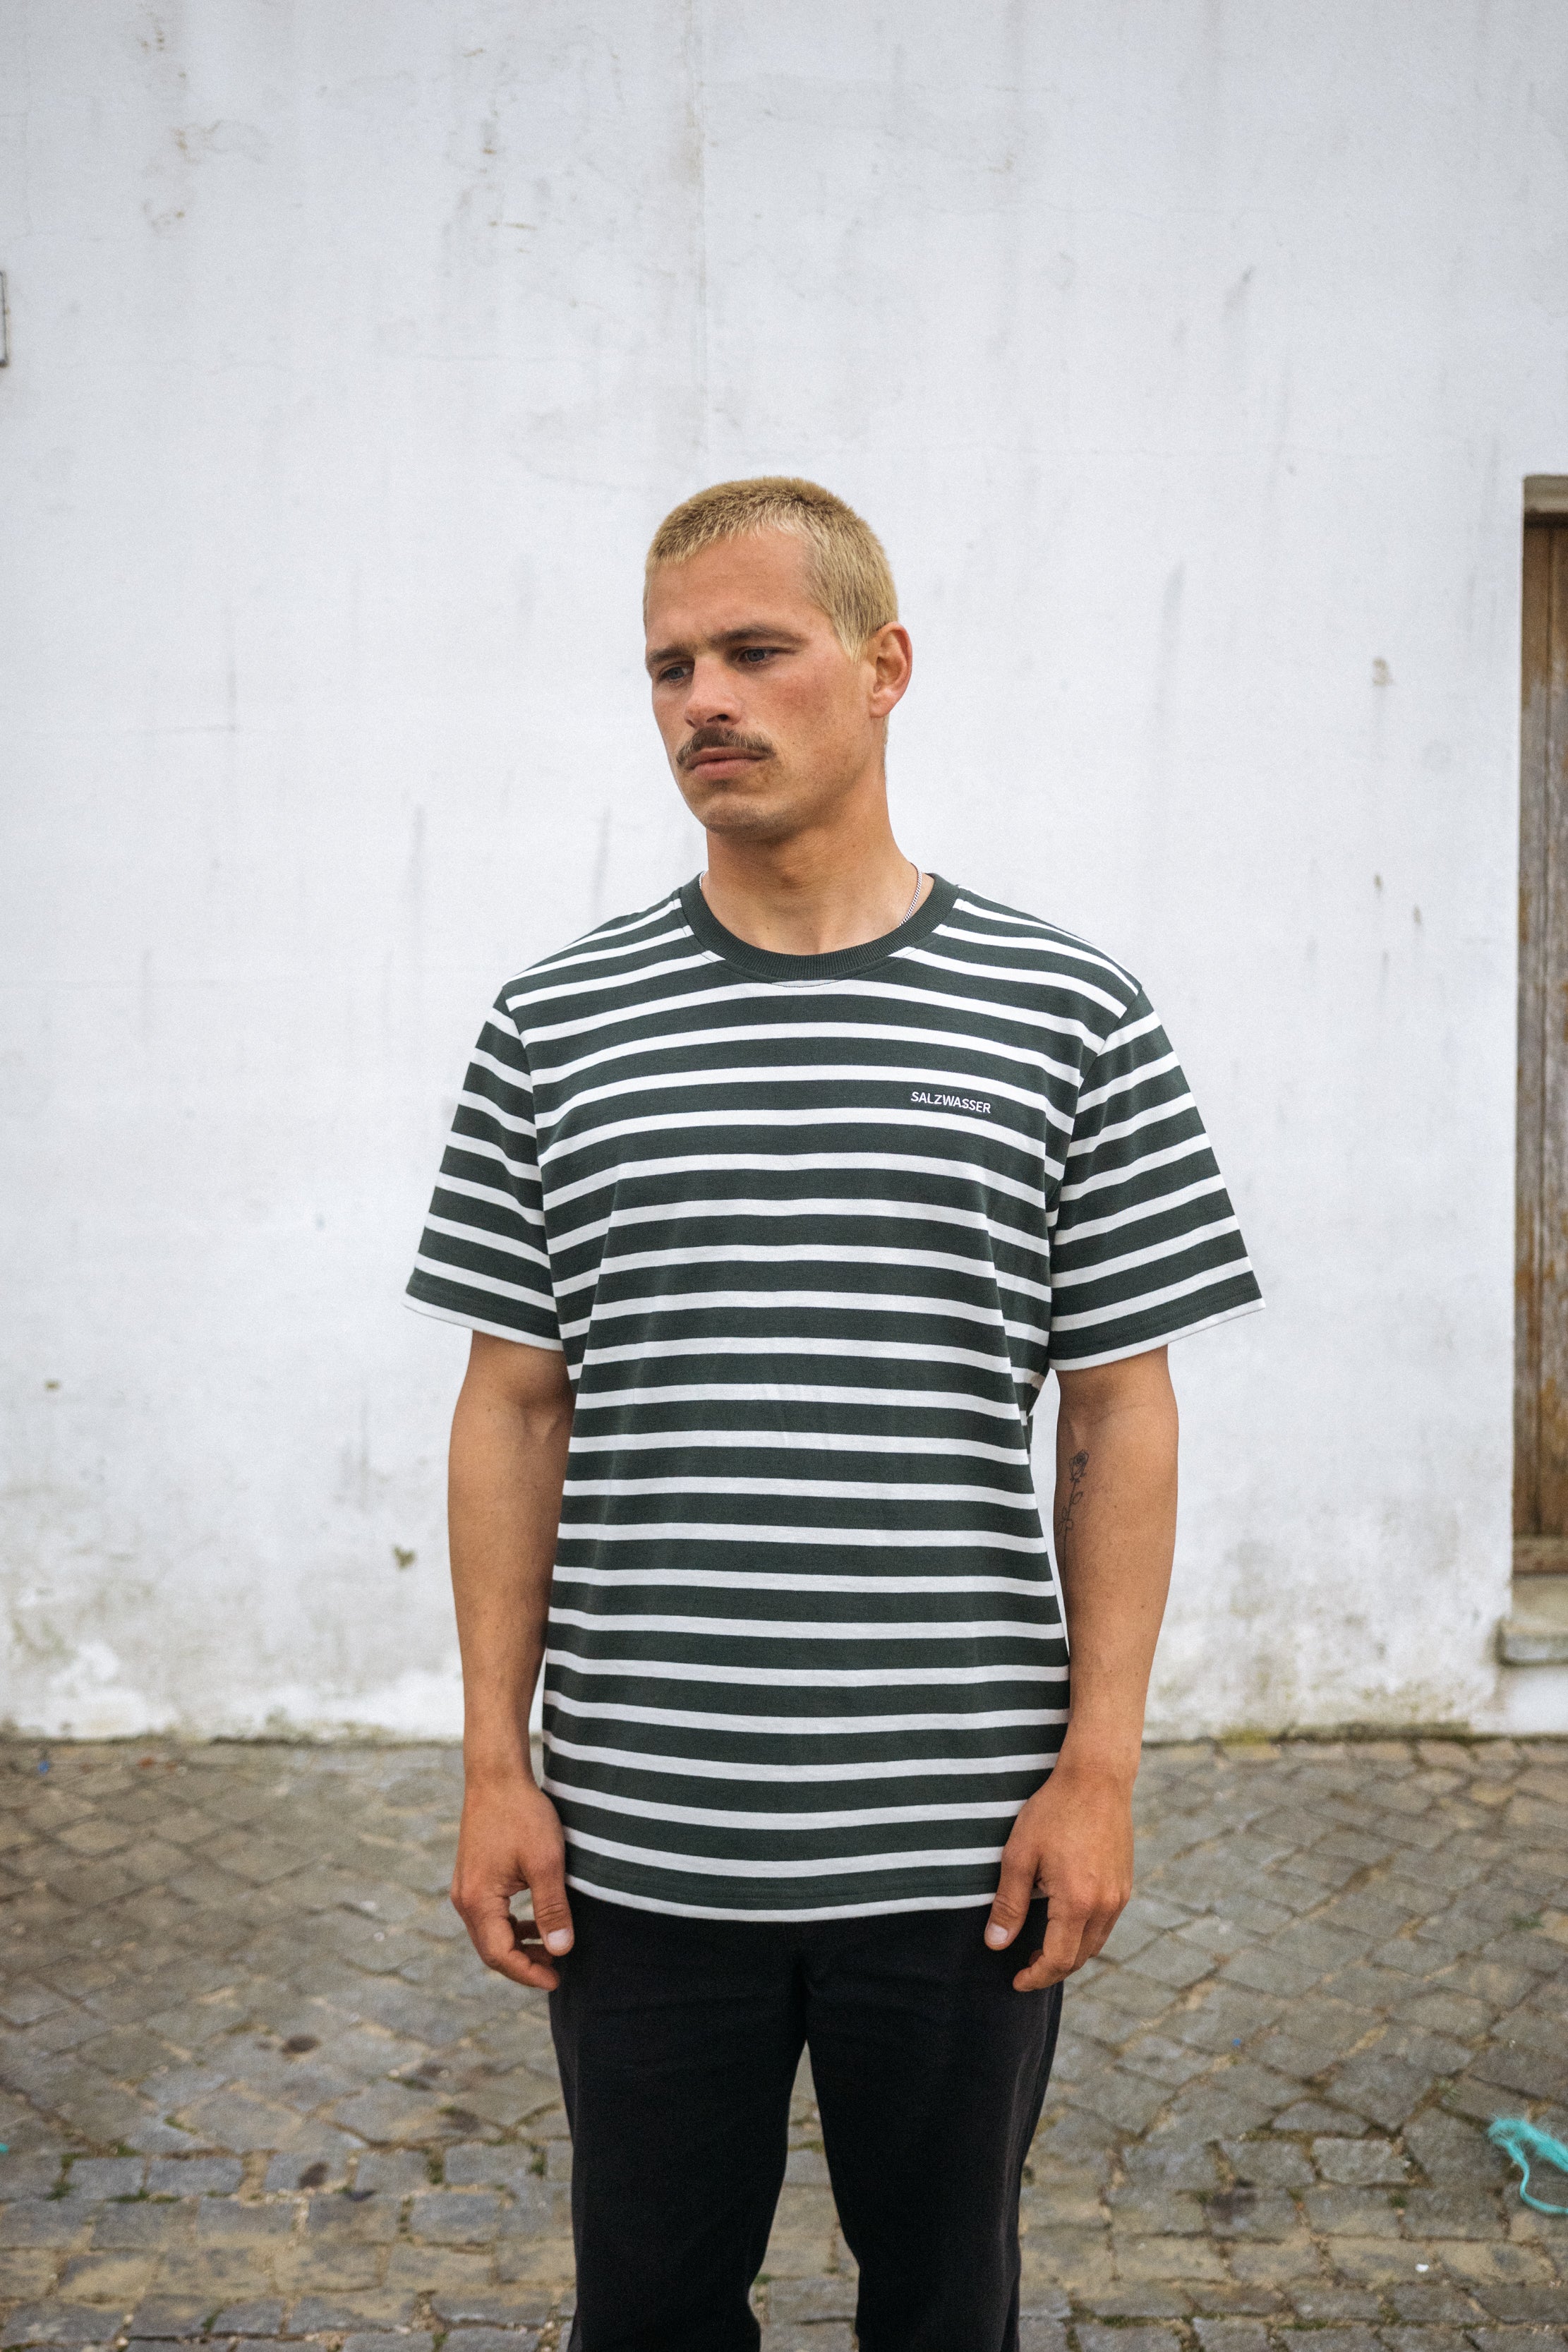 Olive Striped T-Shirt Jasper made from organic cotton by Salzwasser